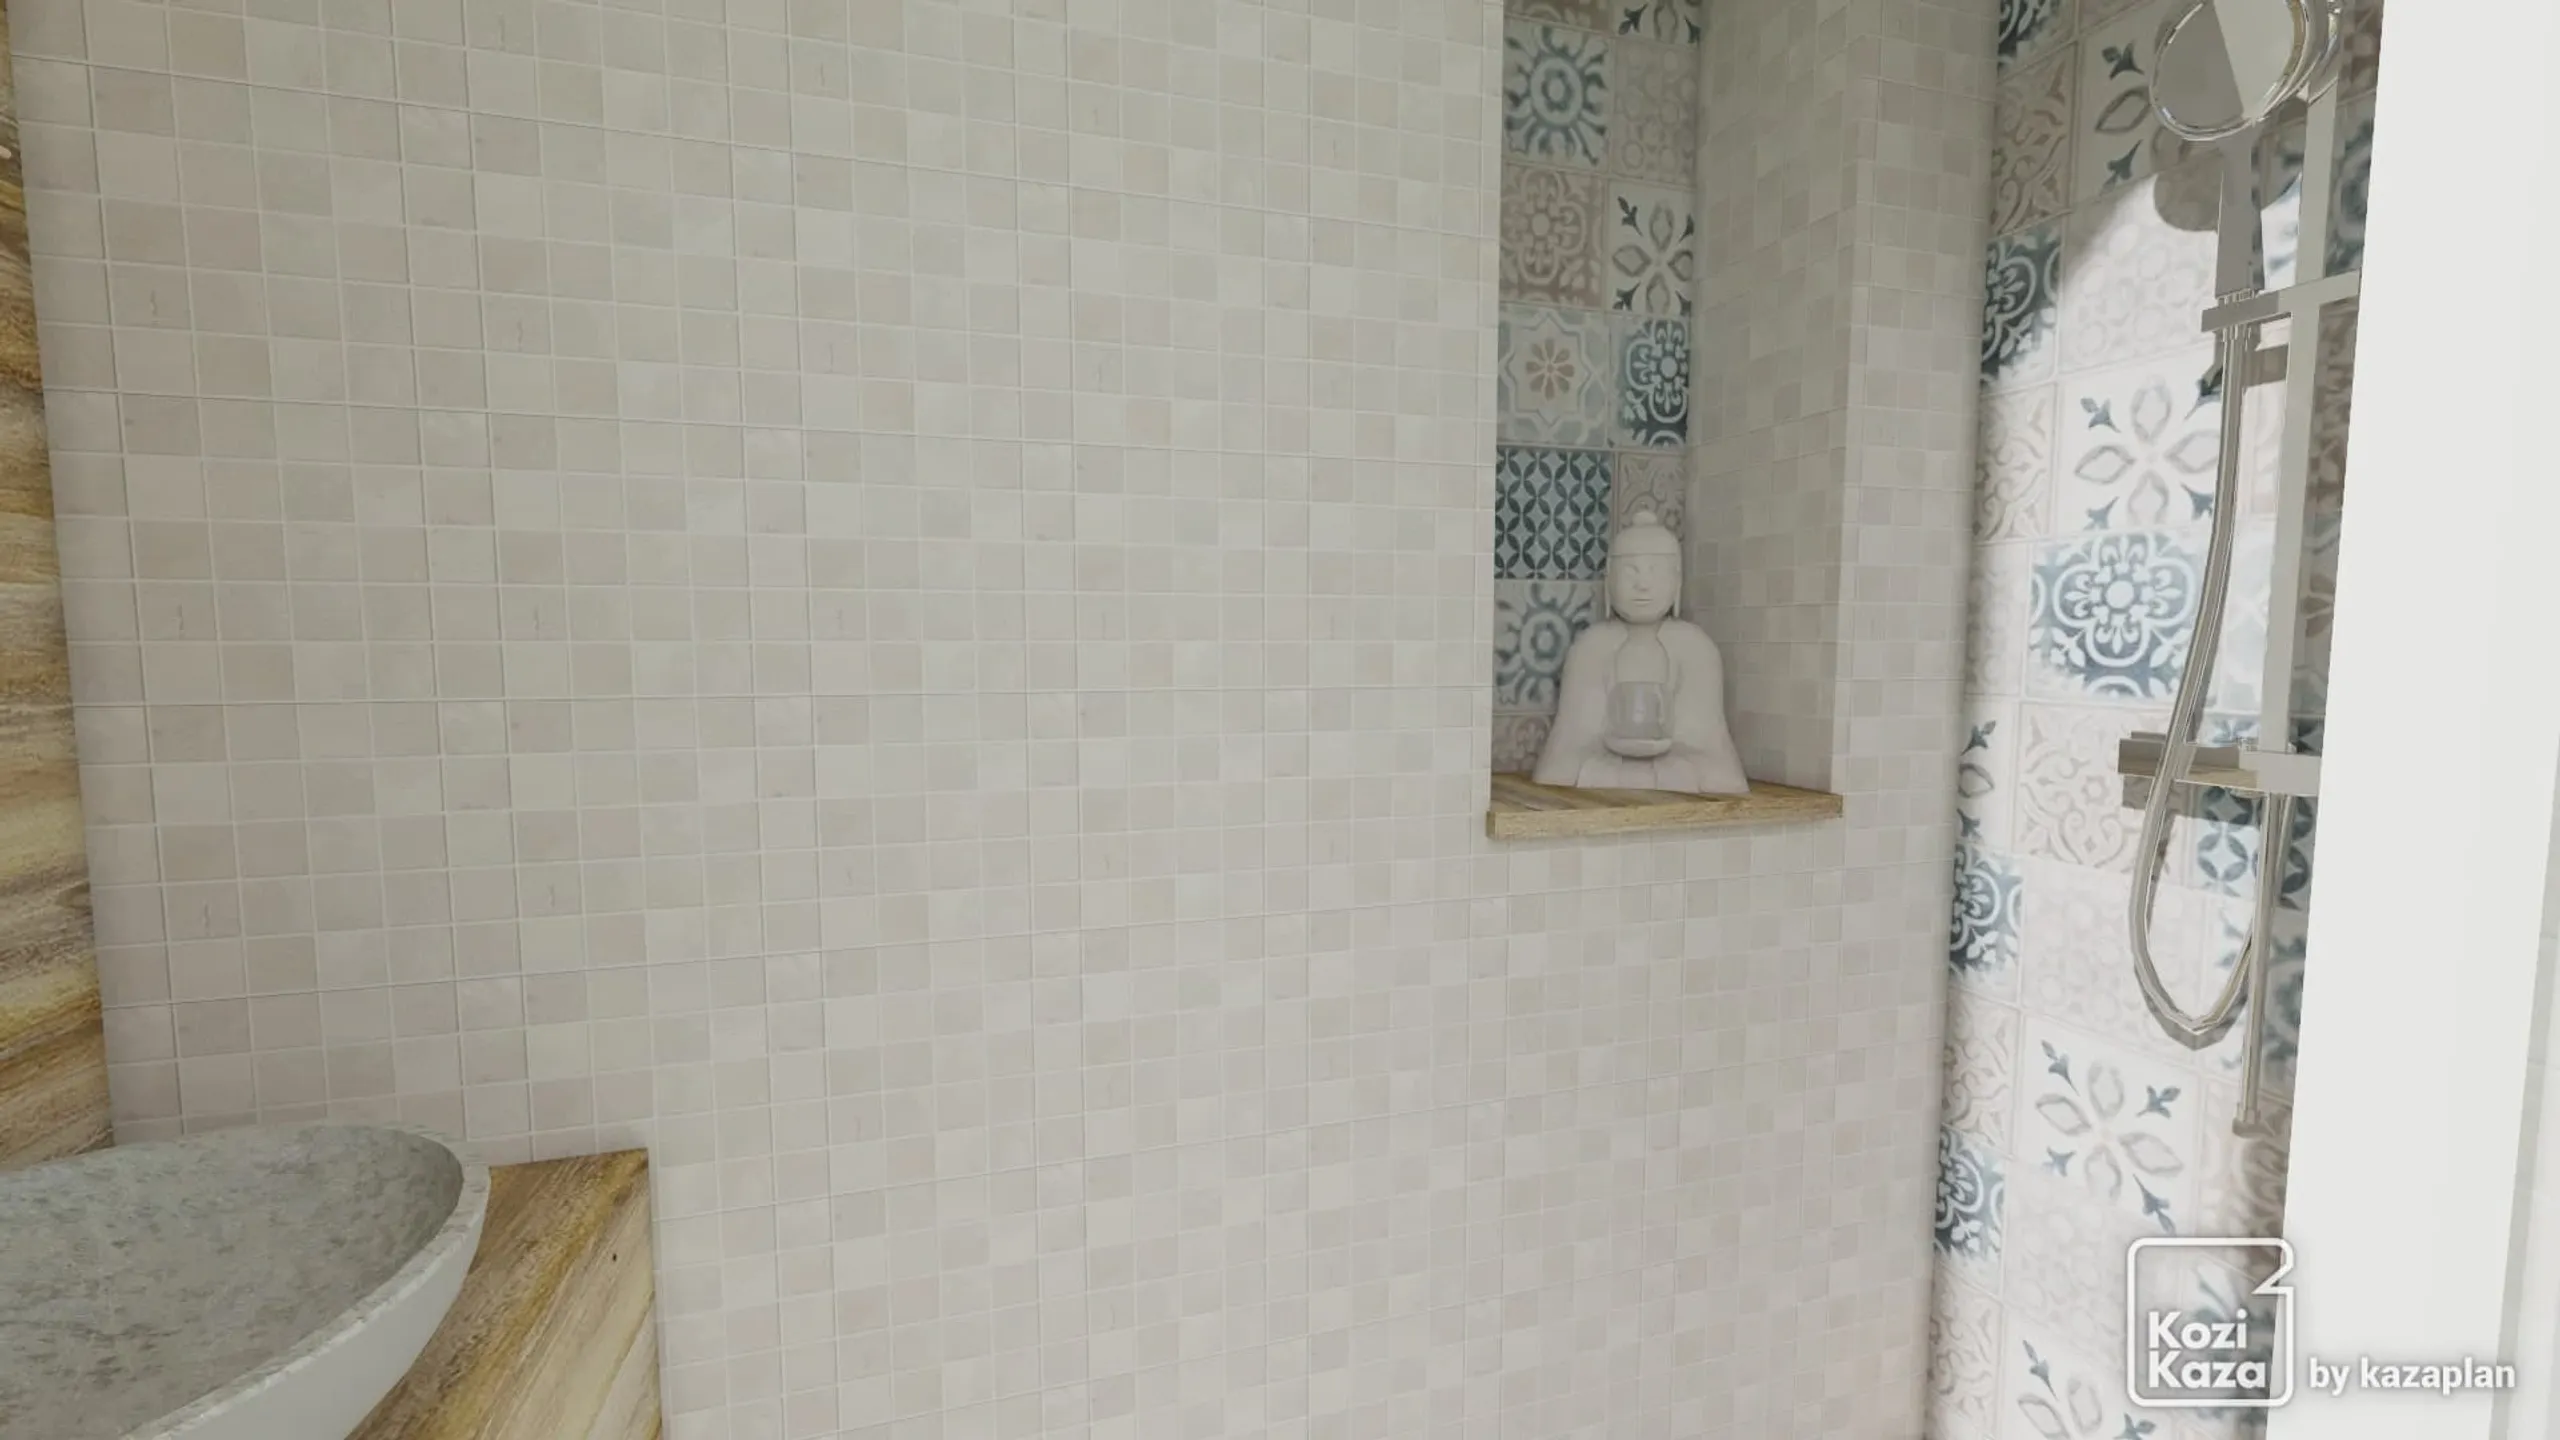 Idée salle de bain zen 3D 2